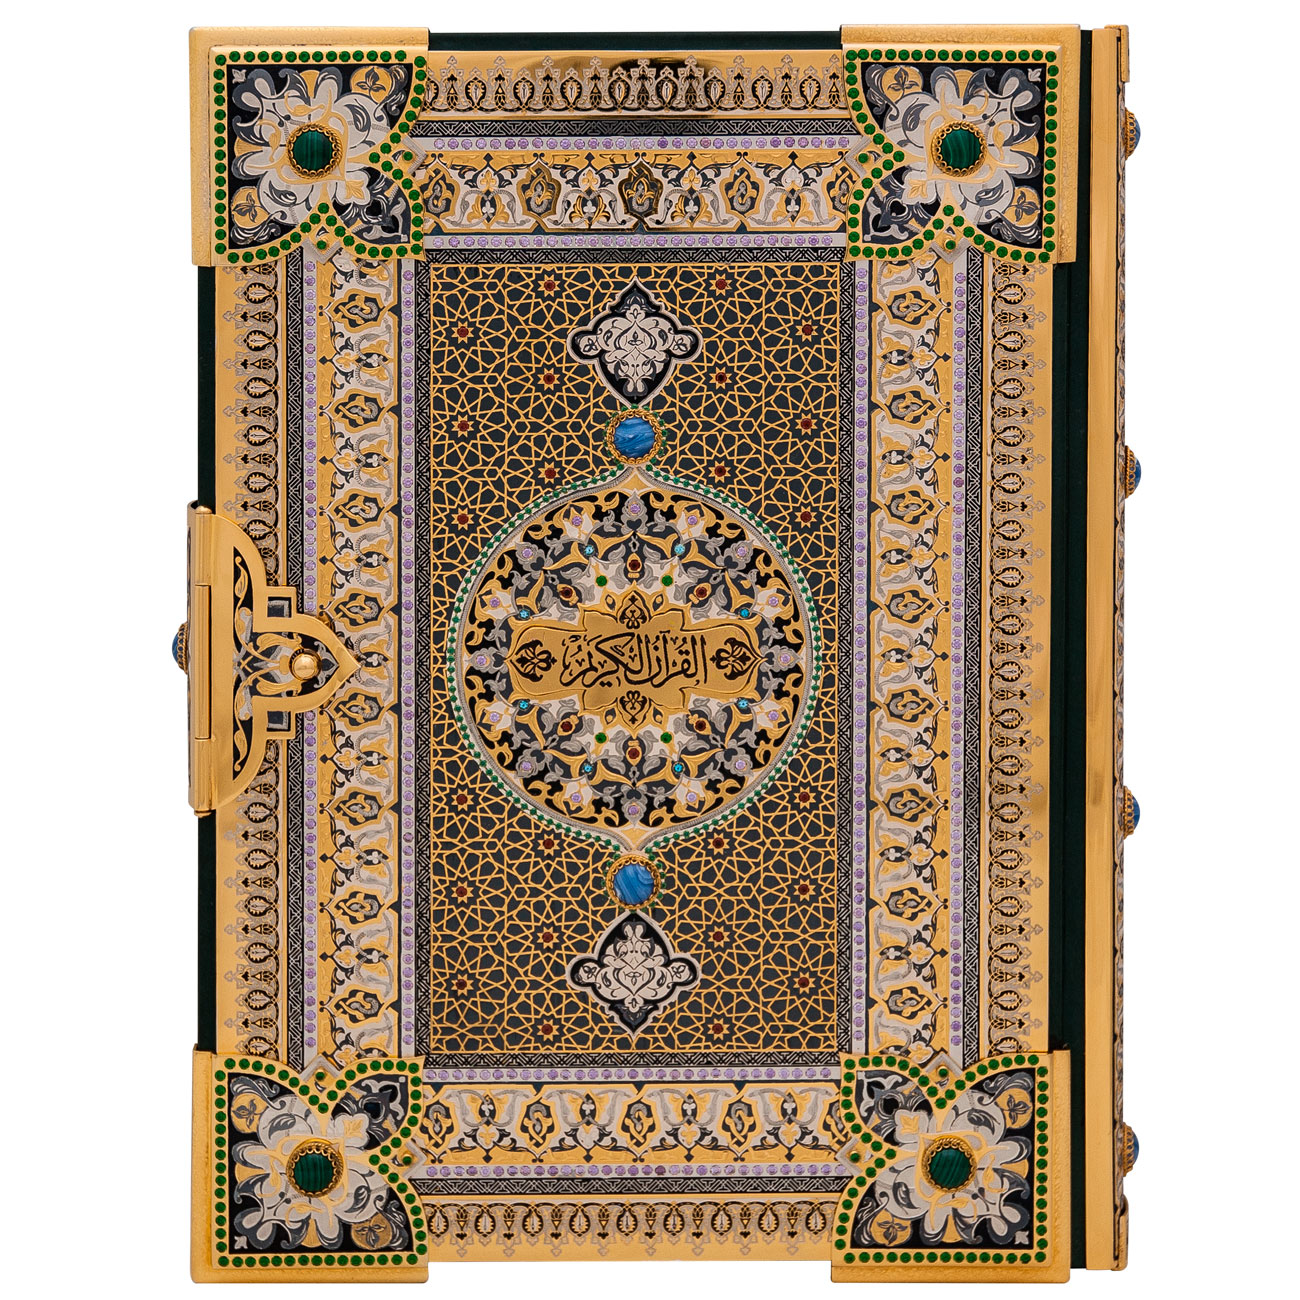 Религиозная книга "Коран" (Златоуст) - артикул: 308310 | Мосподарок 